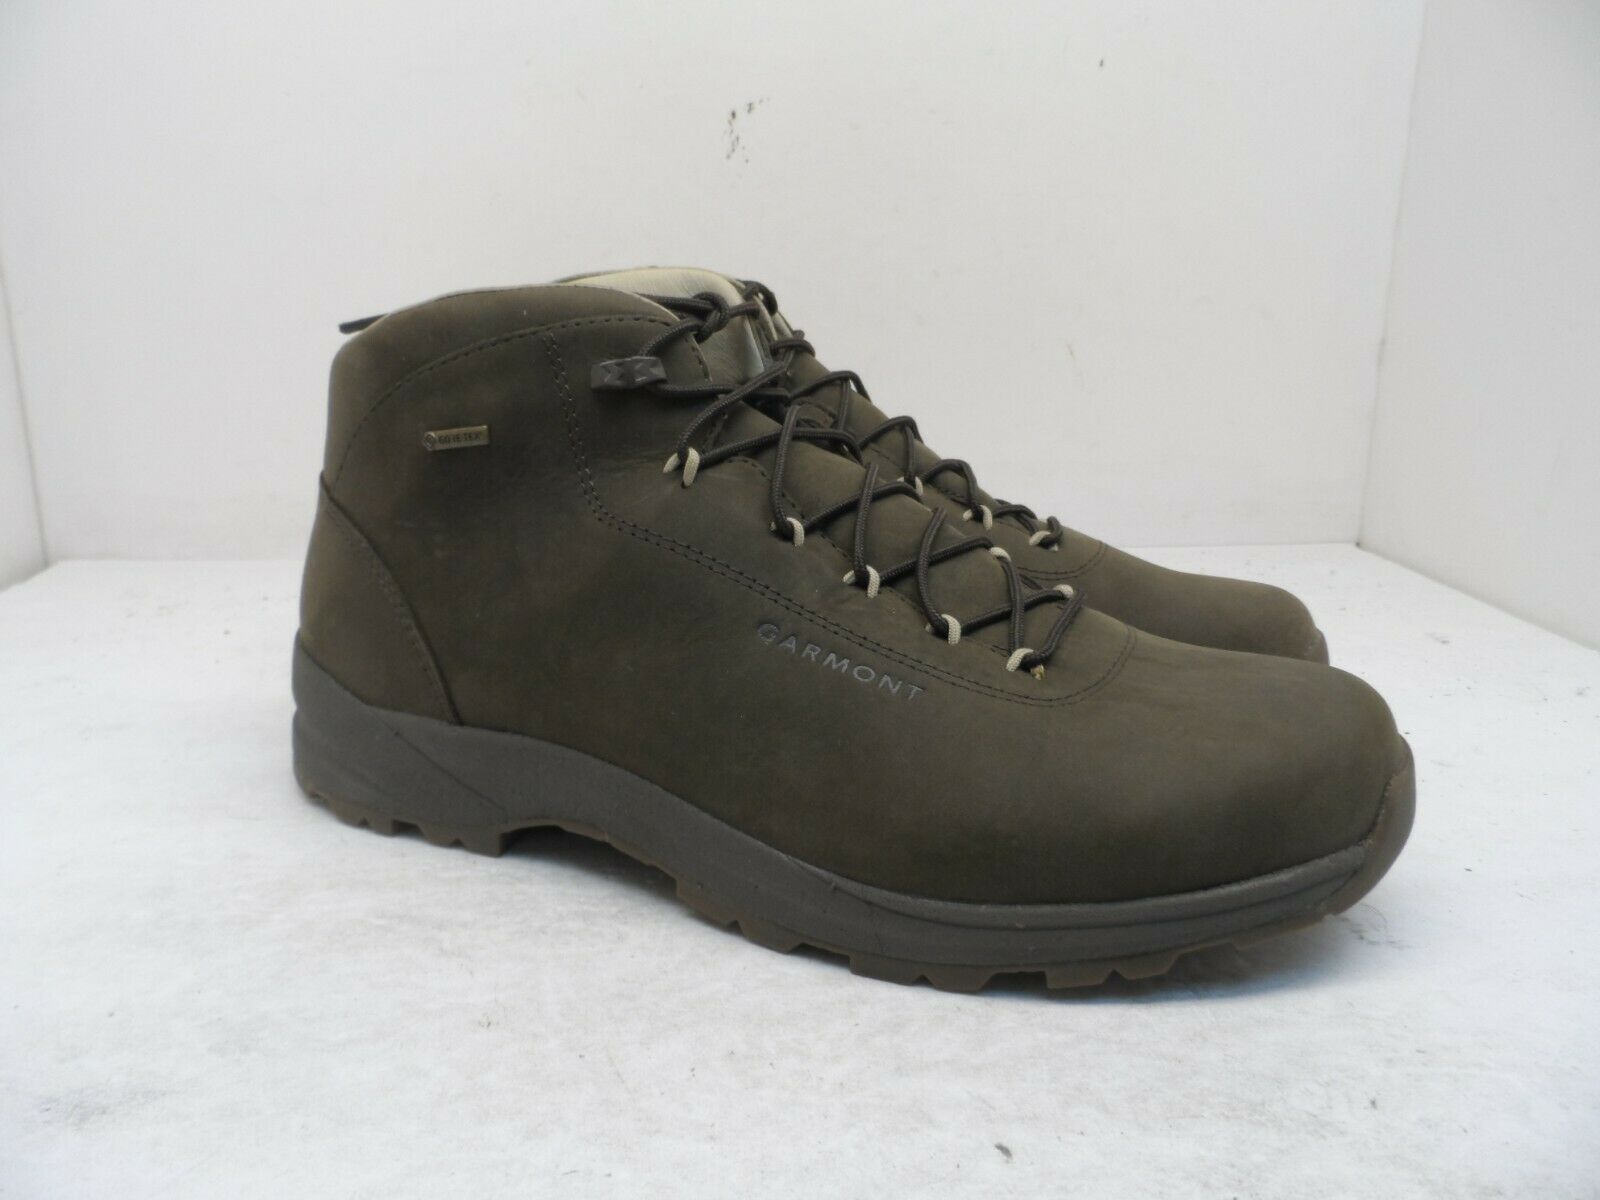 Garmont Men's Tiya Trail Hiking Boot 481046 Olive Green Size 9M